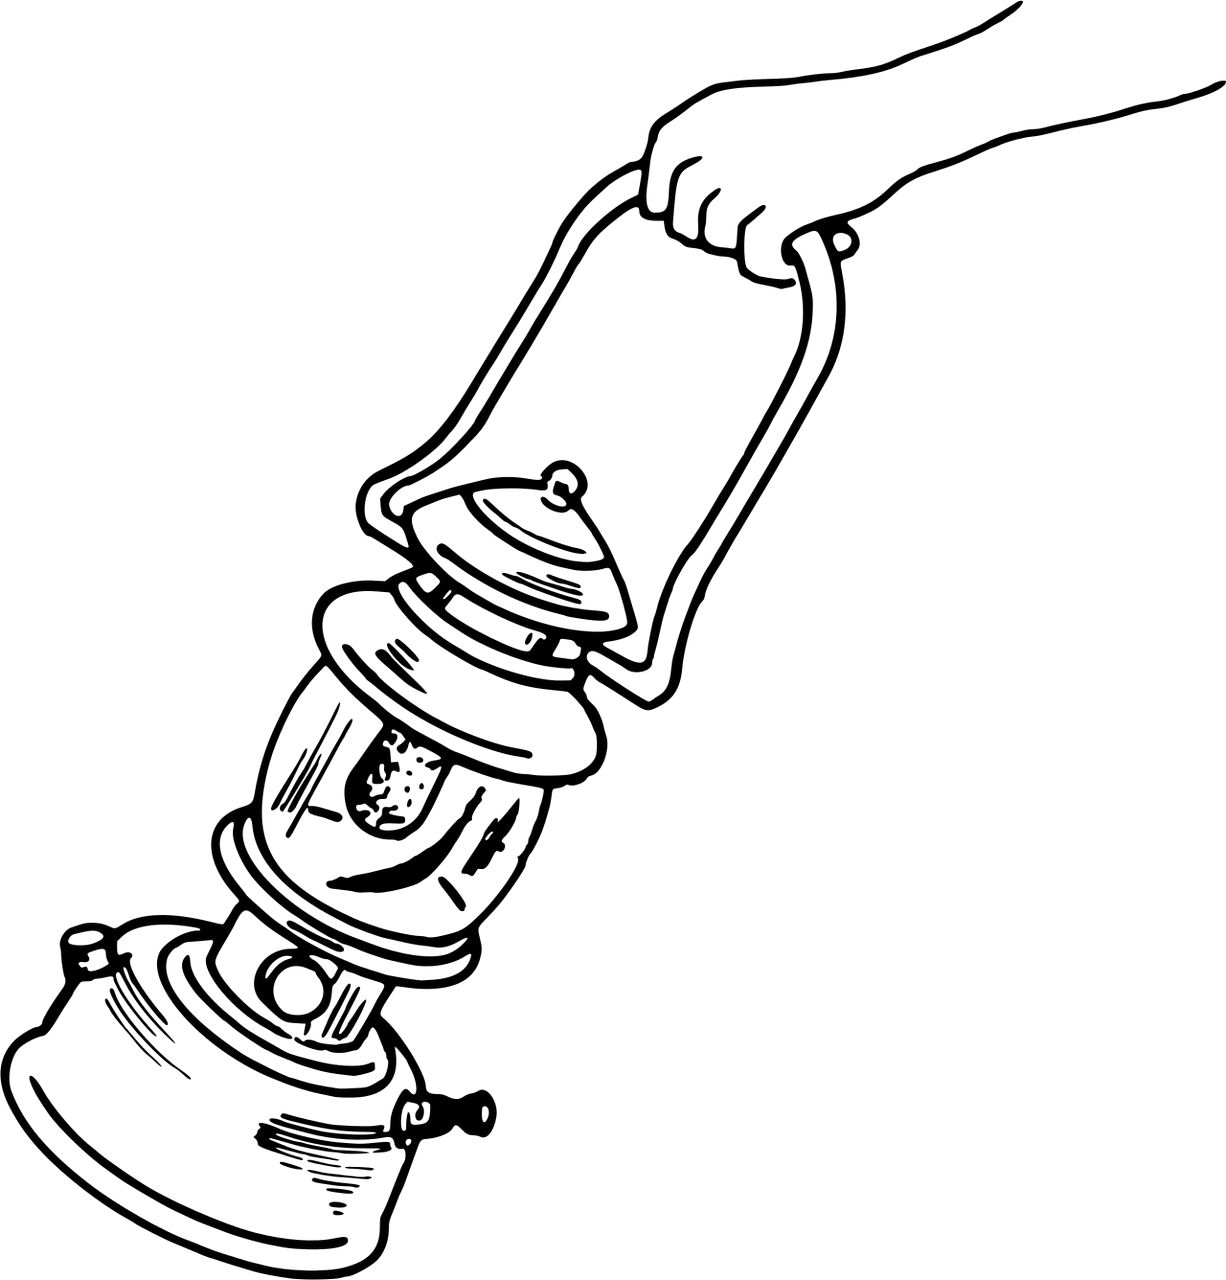 Omalovnka petrolejov lampa k vytisknut na A4